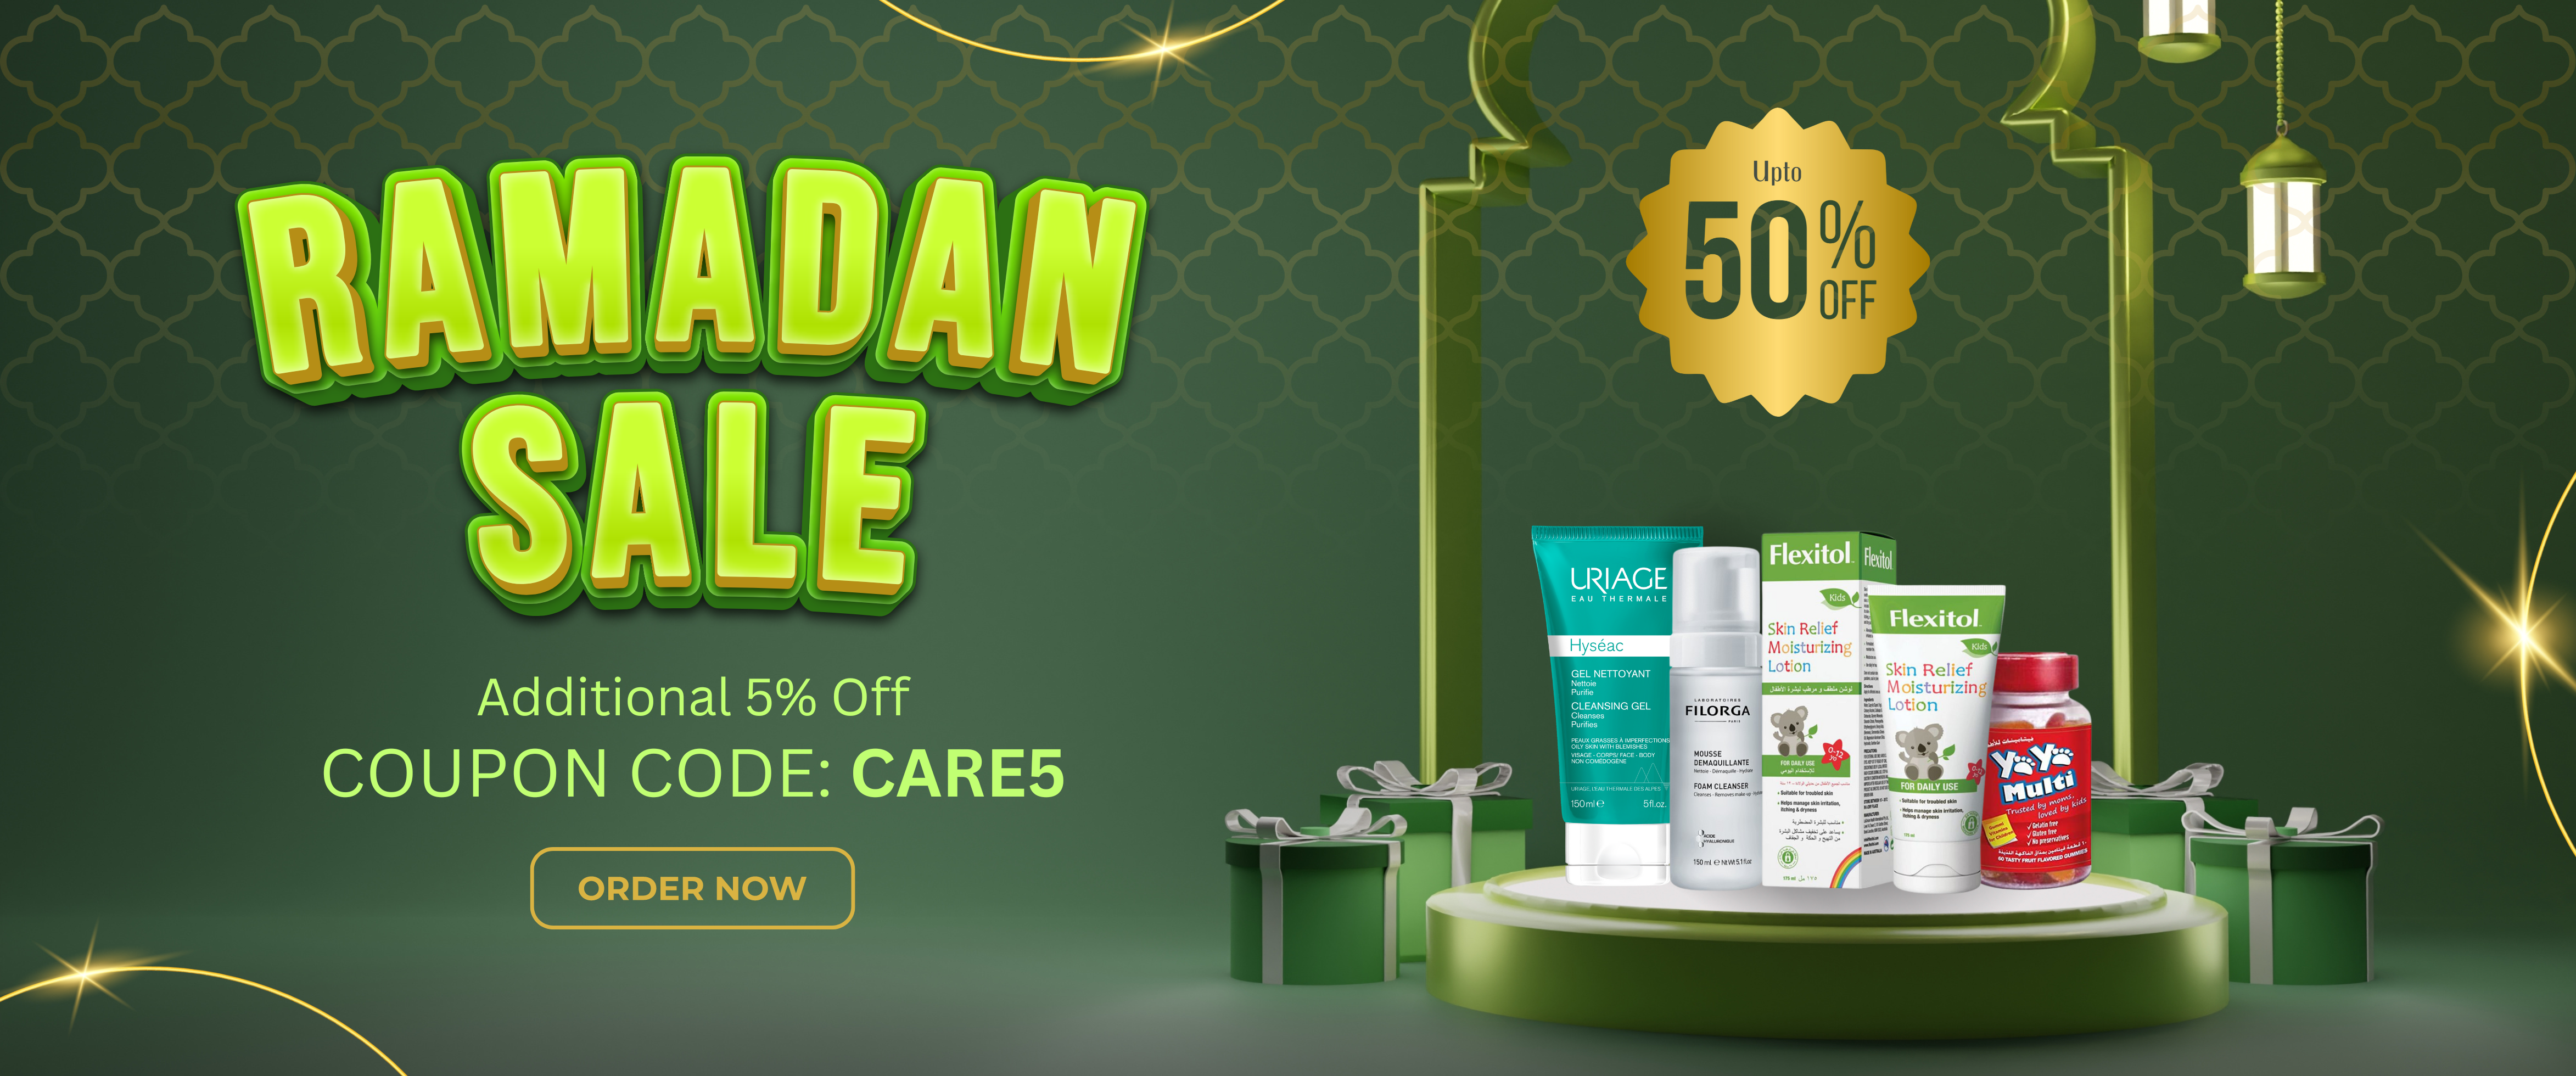 Ramadan sale offer CHS Pharmacy